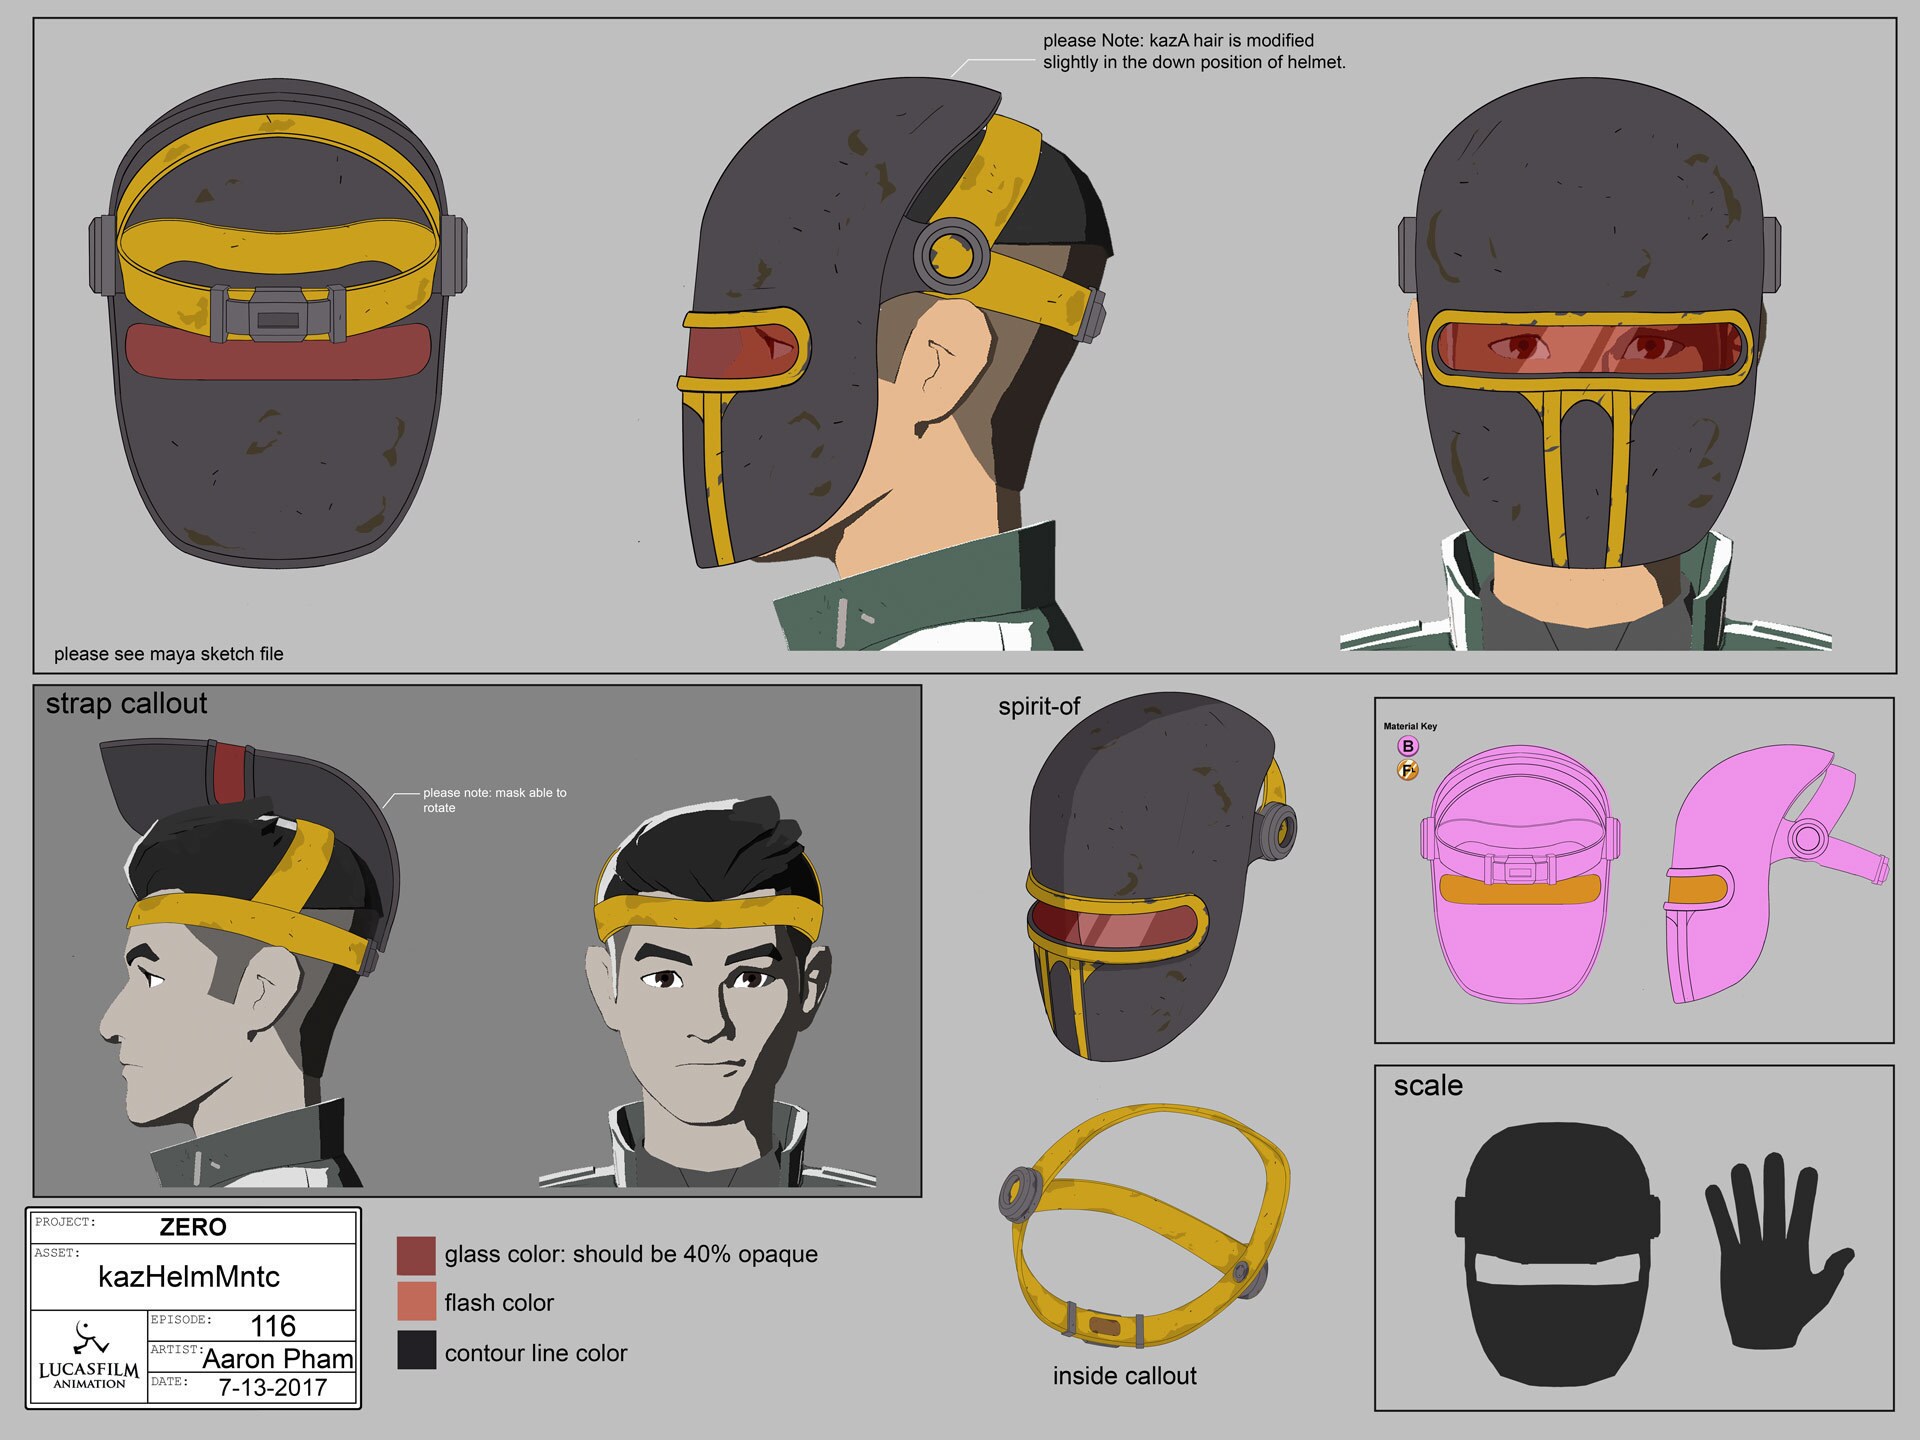 Kaz's helmet concept by Aaron Pham.